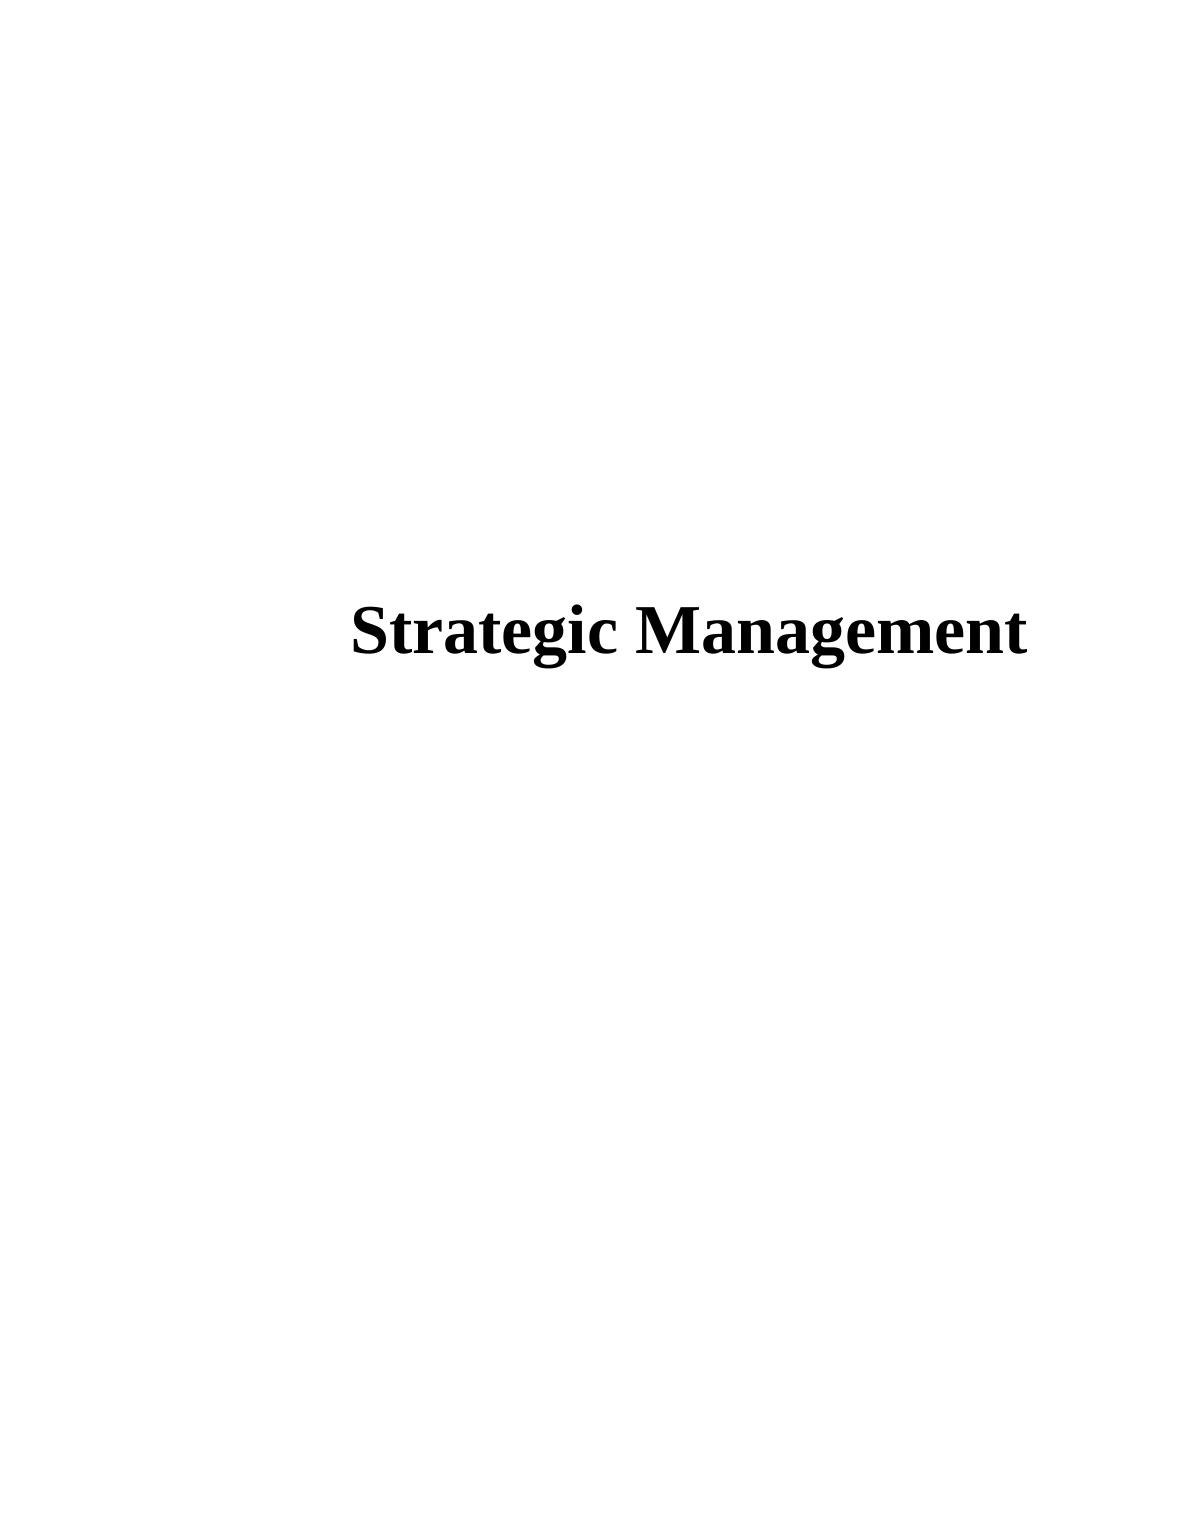 Strategic Management Assignment: Reebok Company_1